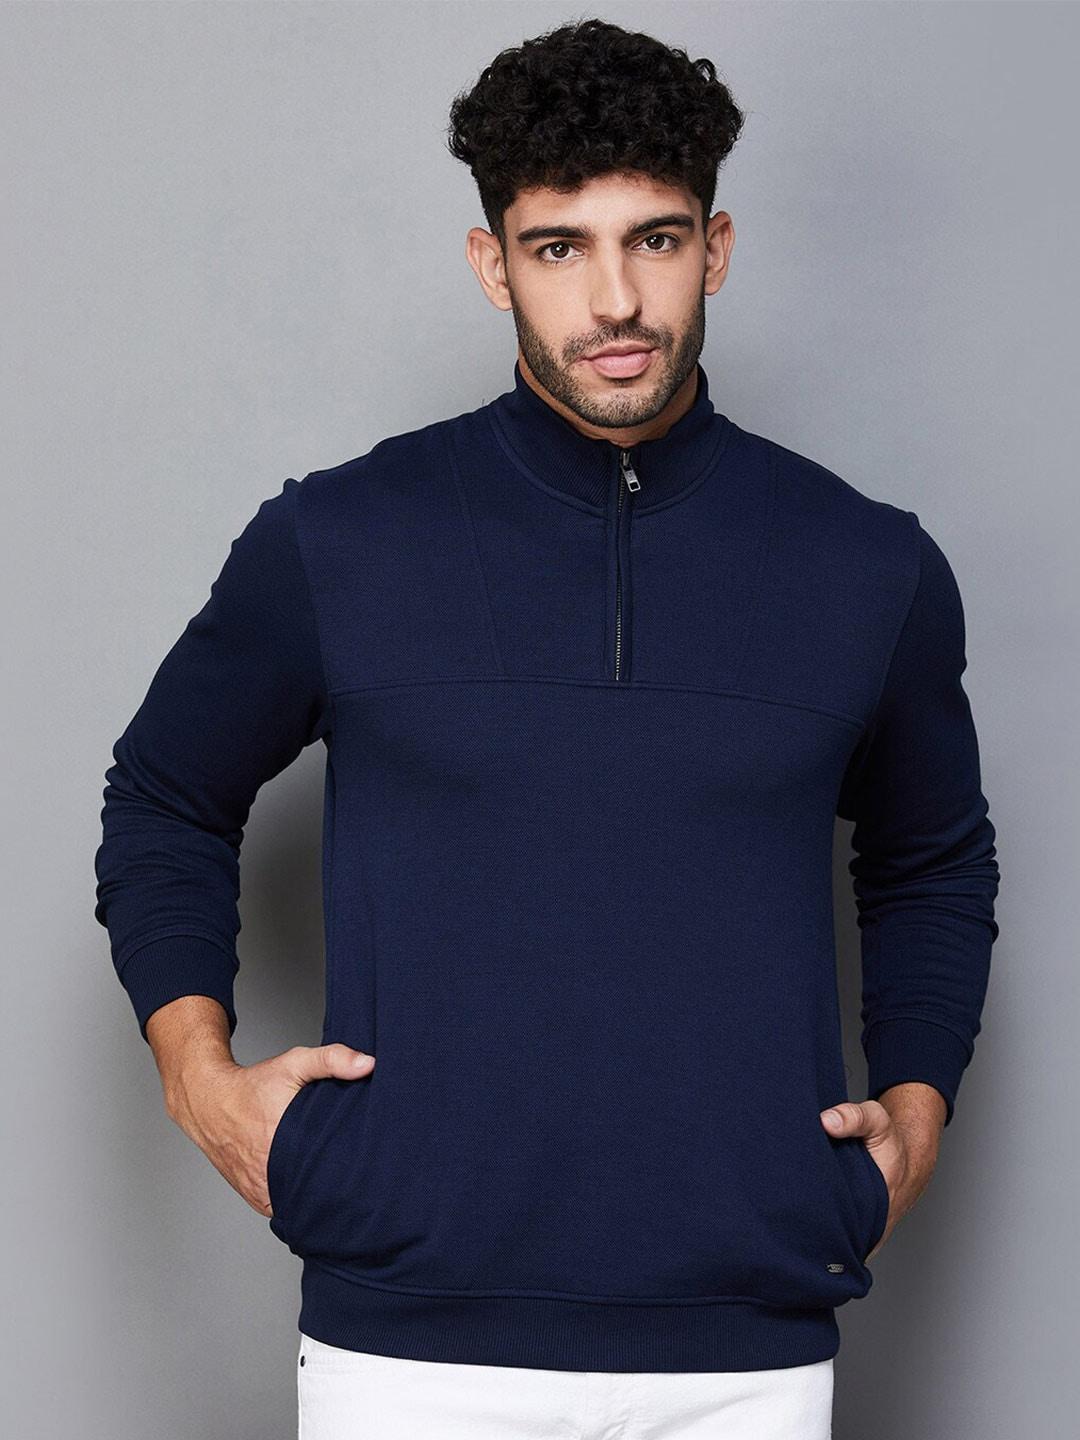 code-by-lifestyle-men-sweatshirt